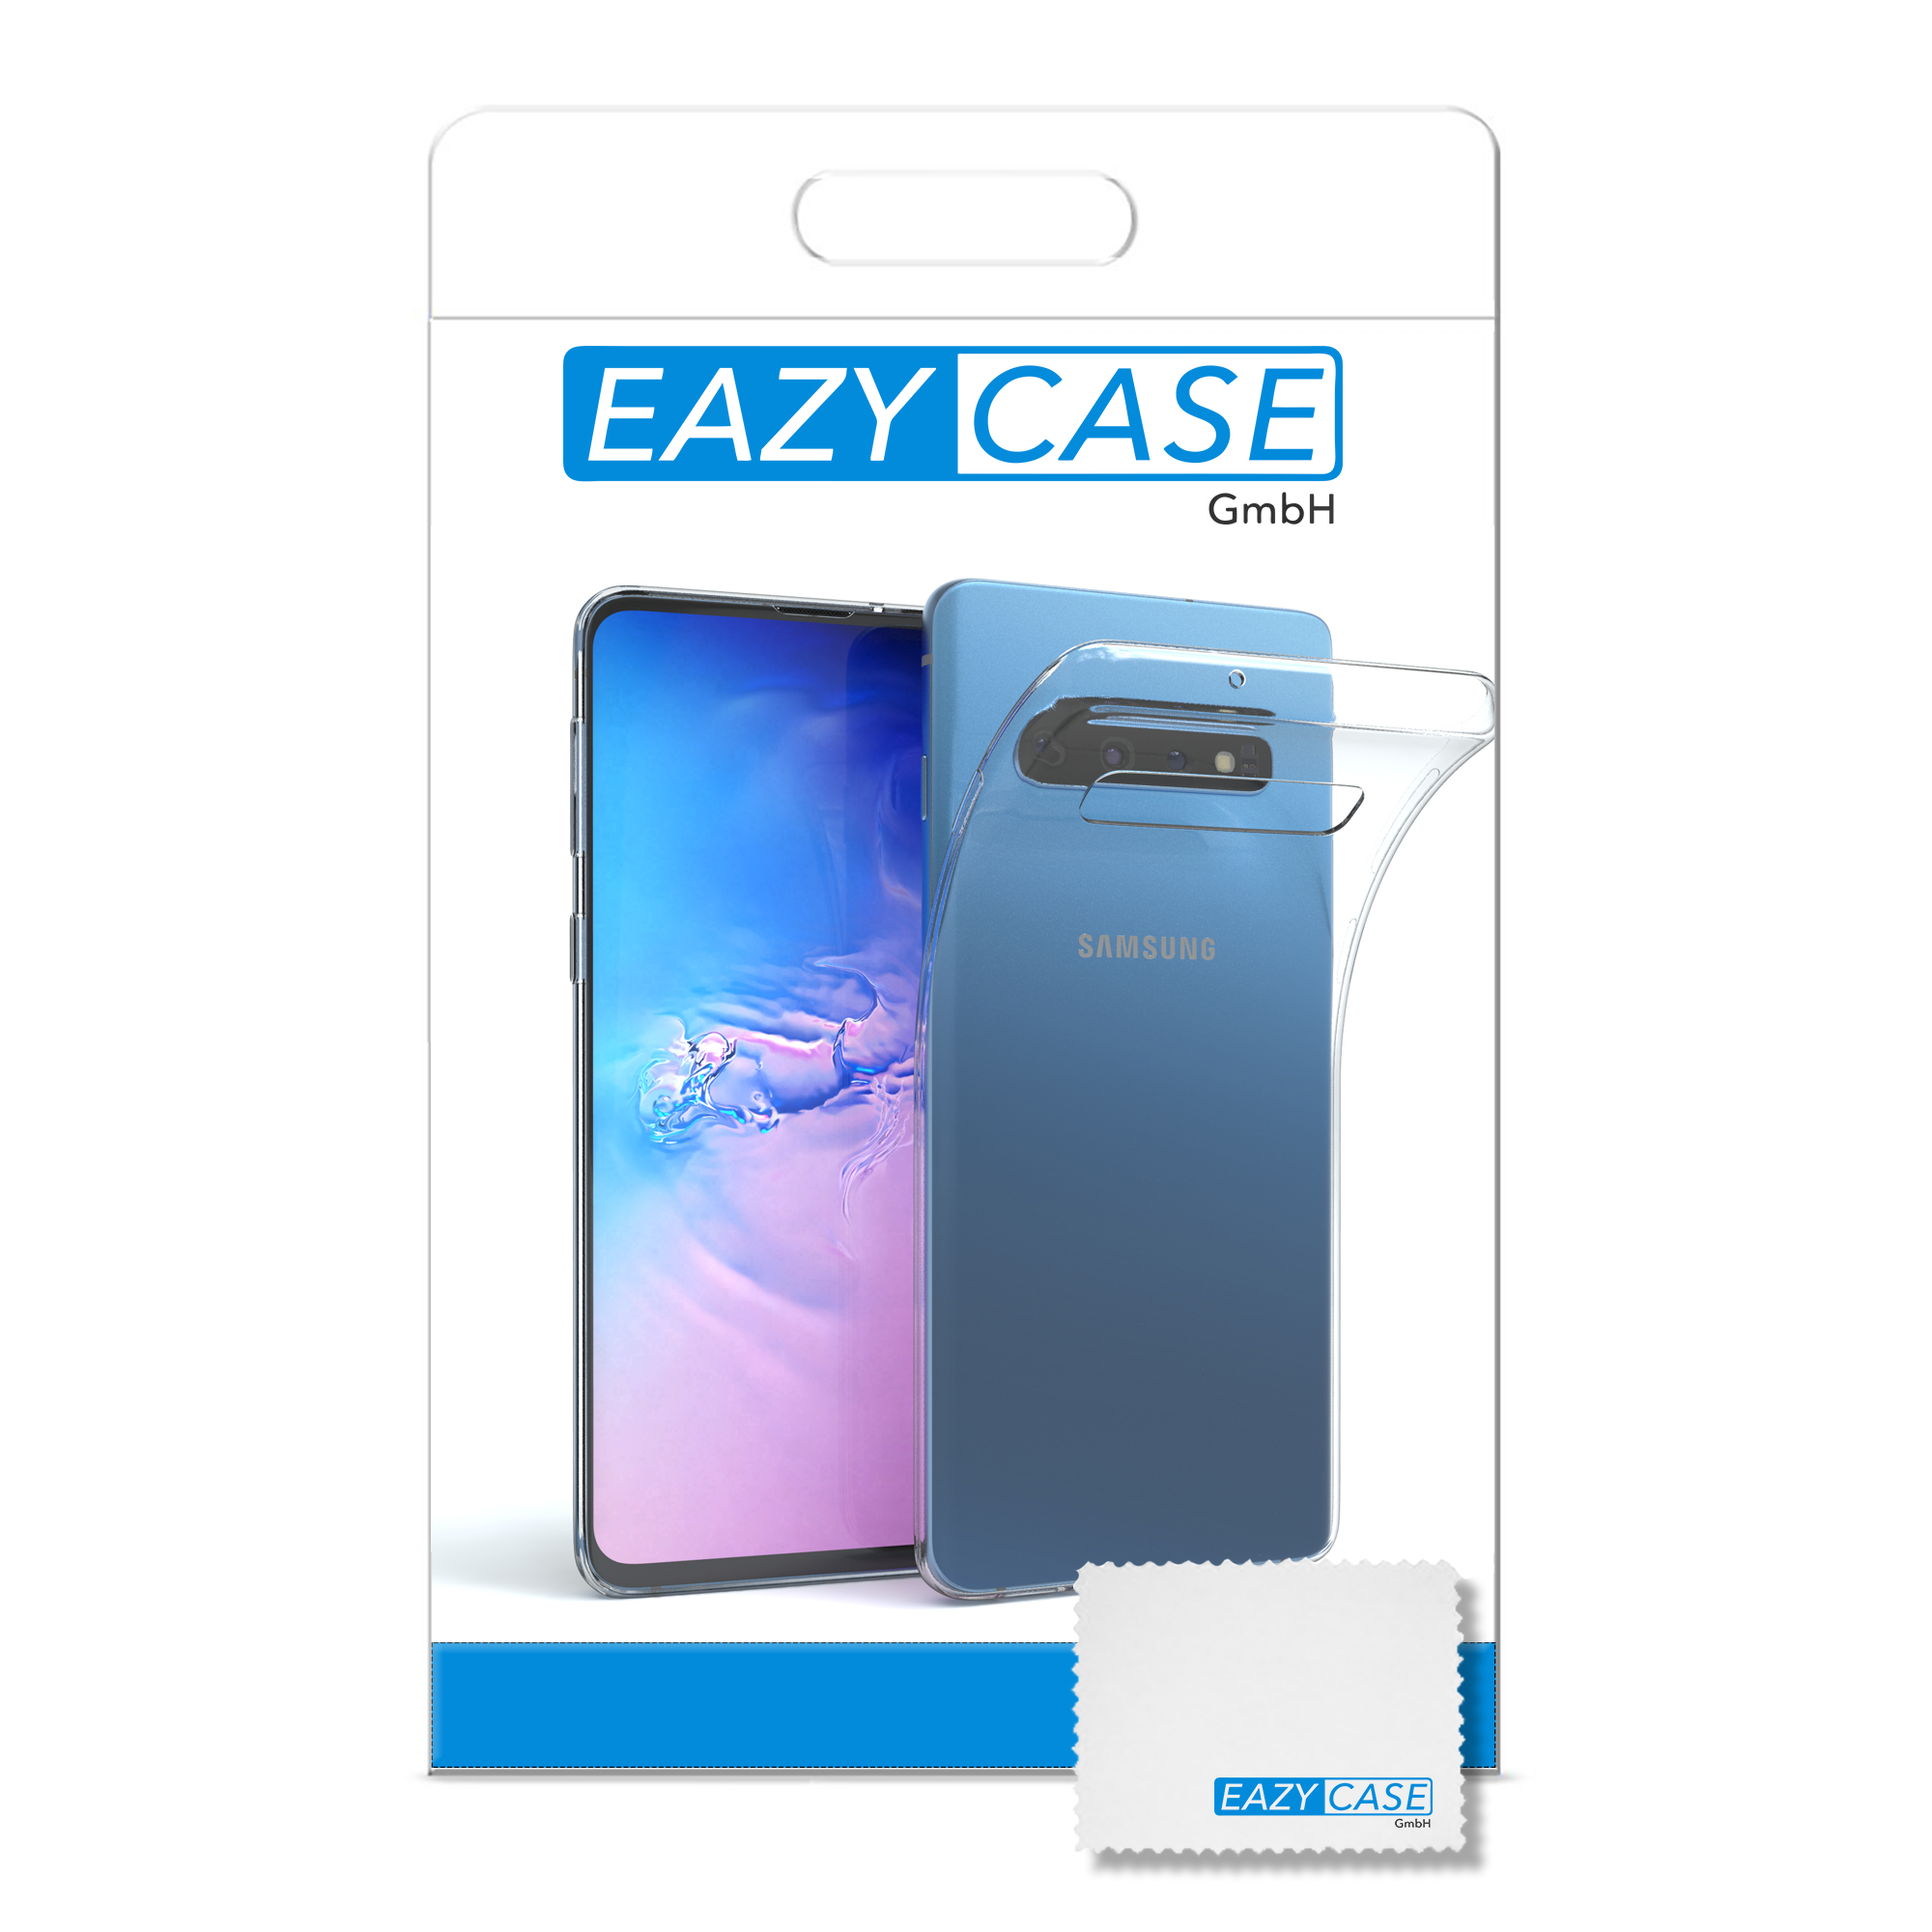 Slimcover EAZY Backcover, CASE S10, Durchsichtig Clear, Galaxy Samsung,